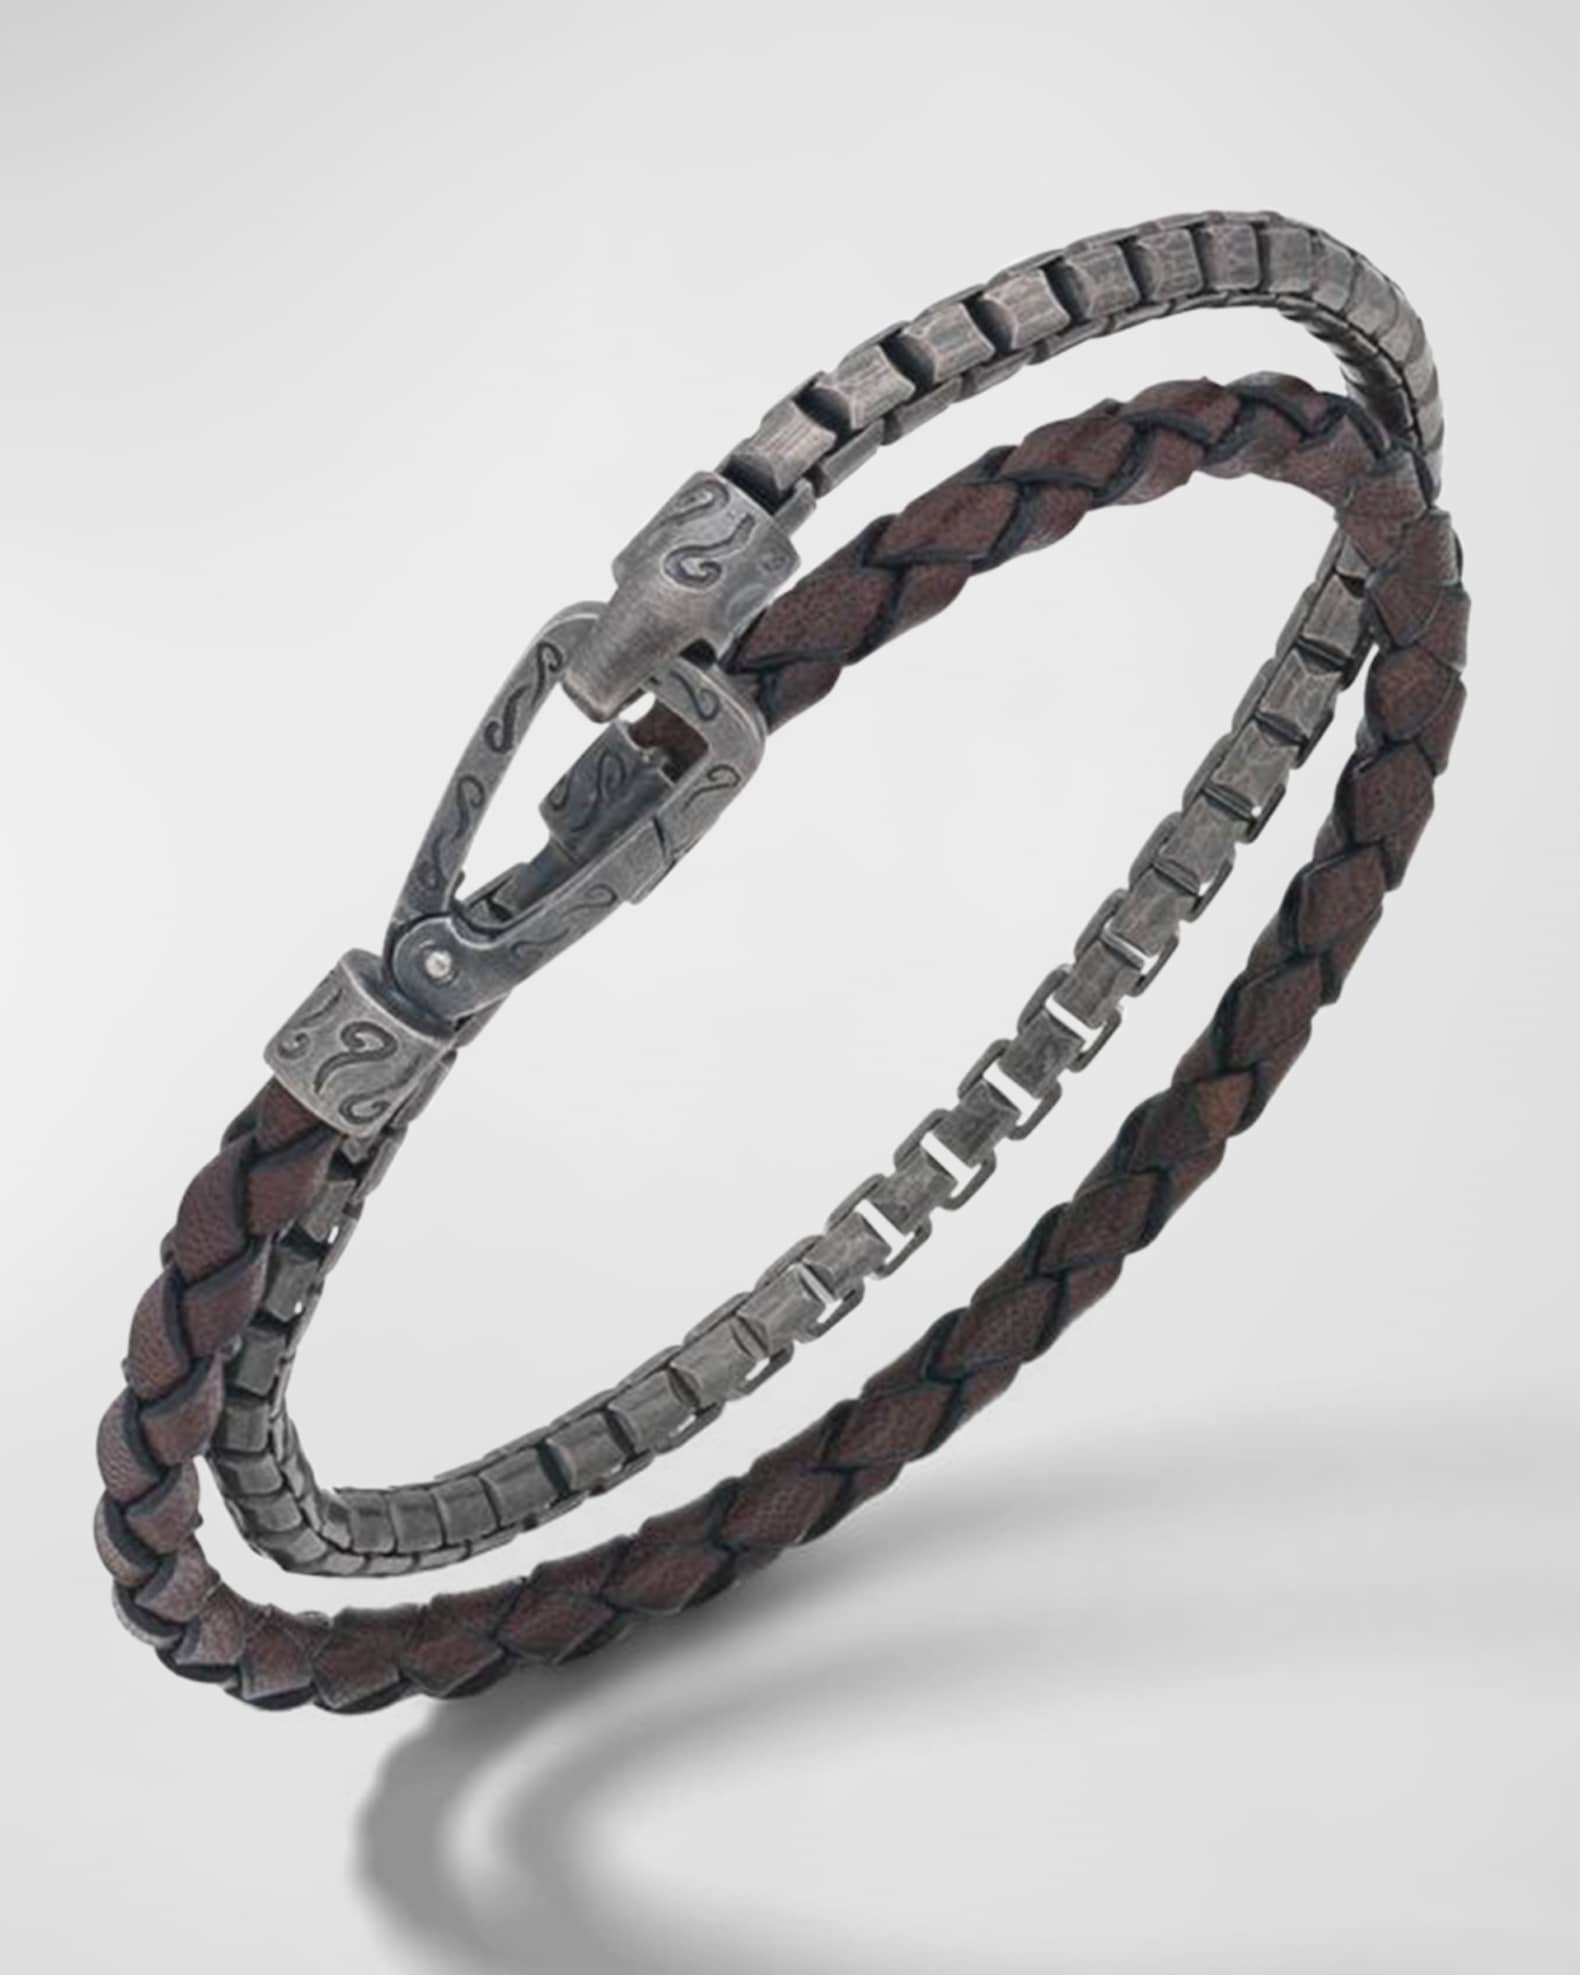 Chain & Jewel Shoulder Bag - Brown, Jasper Handle